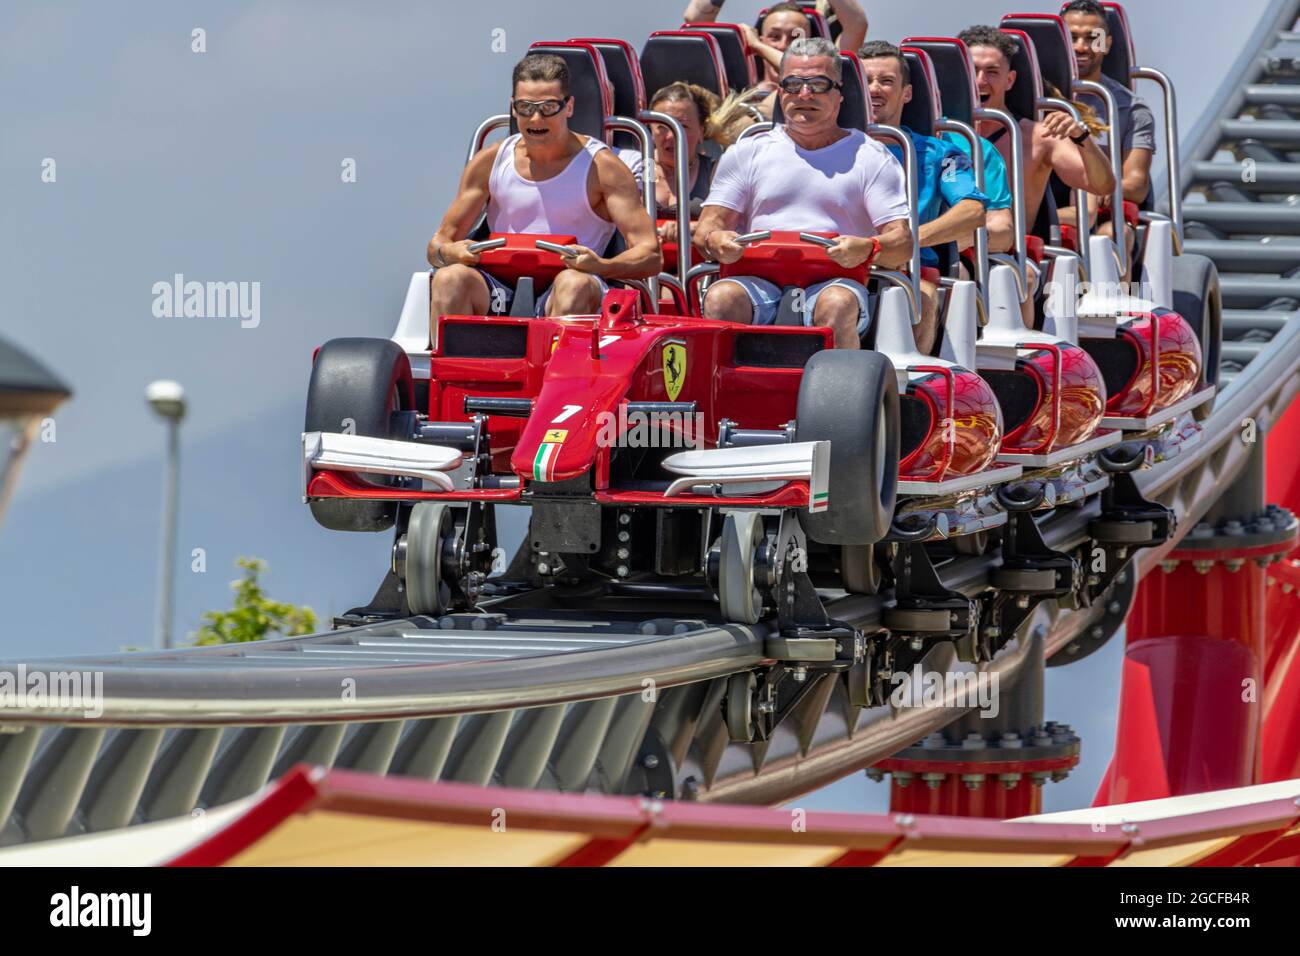 Red Force 112 Mph 367 Foot Ferrari Themed Rollercoaster Ferrari Land Themed Theme Park the fastest coaster in Europe PortAventura  World Stock Photo